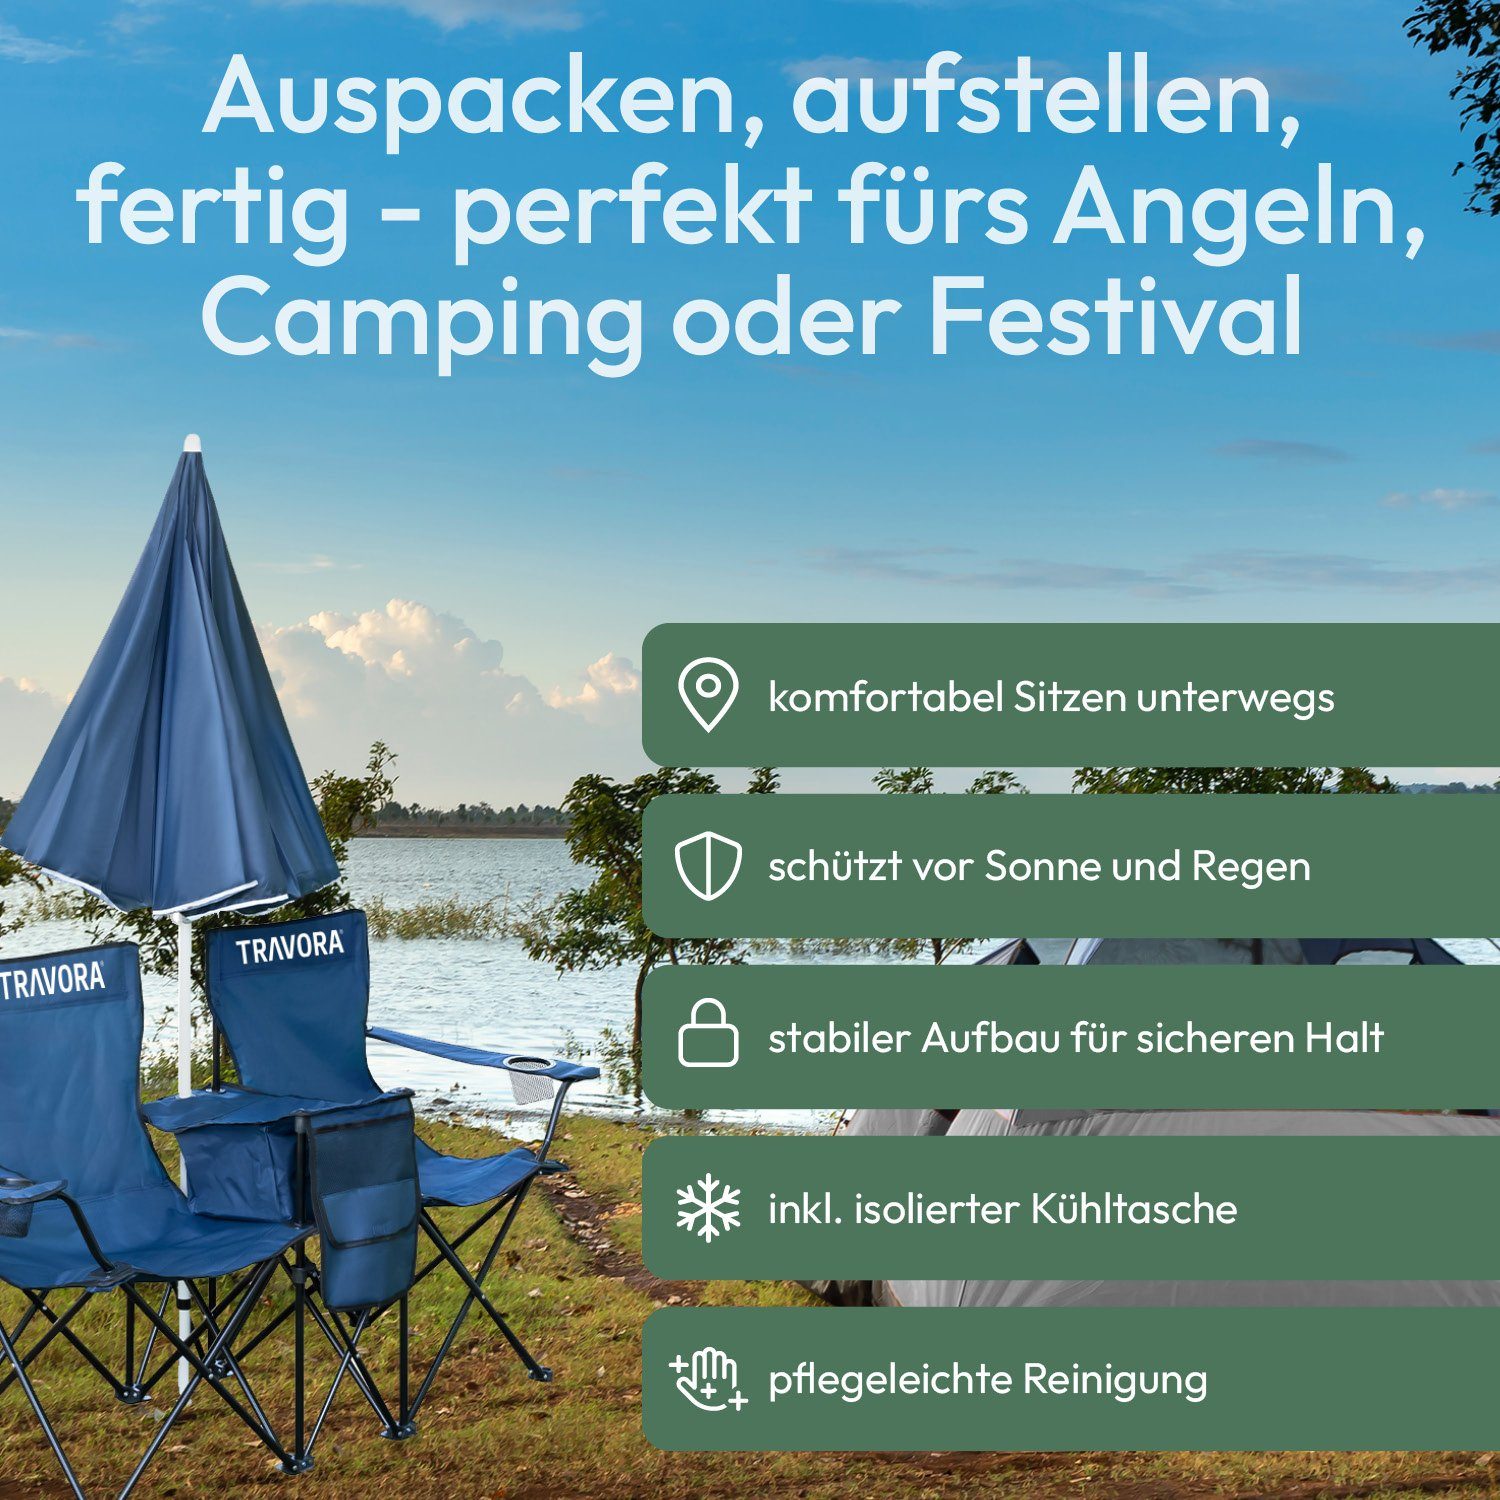 Blau mit 2er Sonnenschirm Kühlfach Anglerstuhl Partner und Campingstuhl MOVAN Campingstuhl